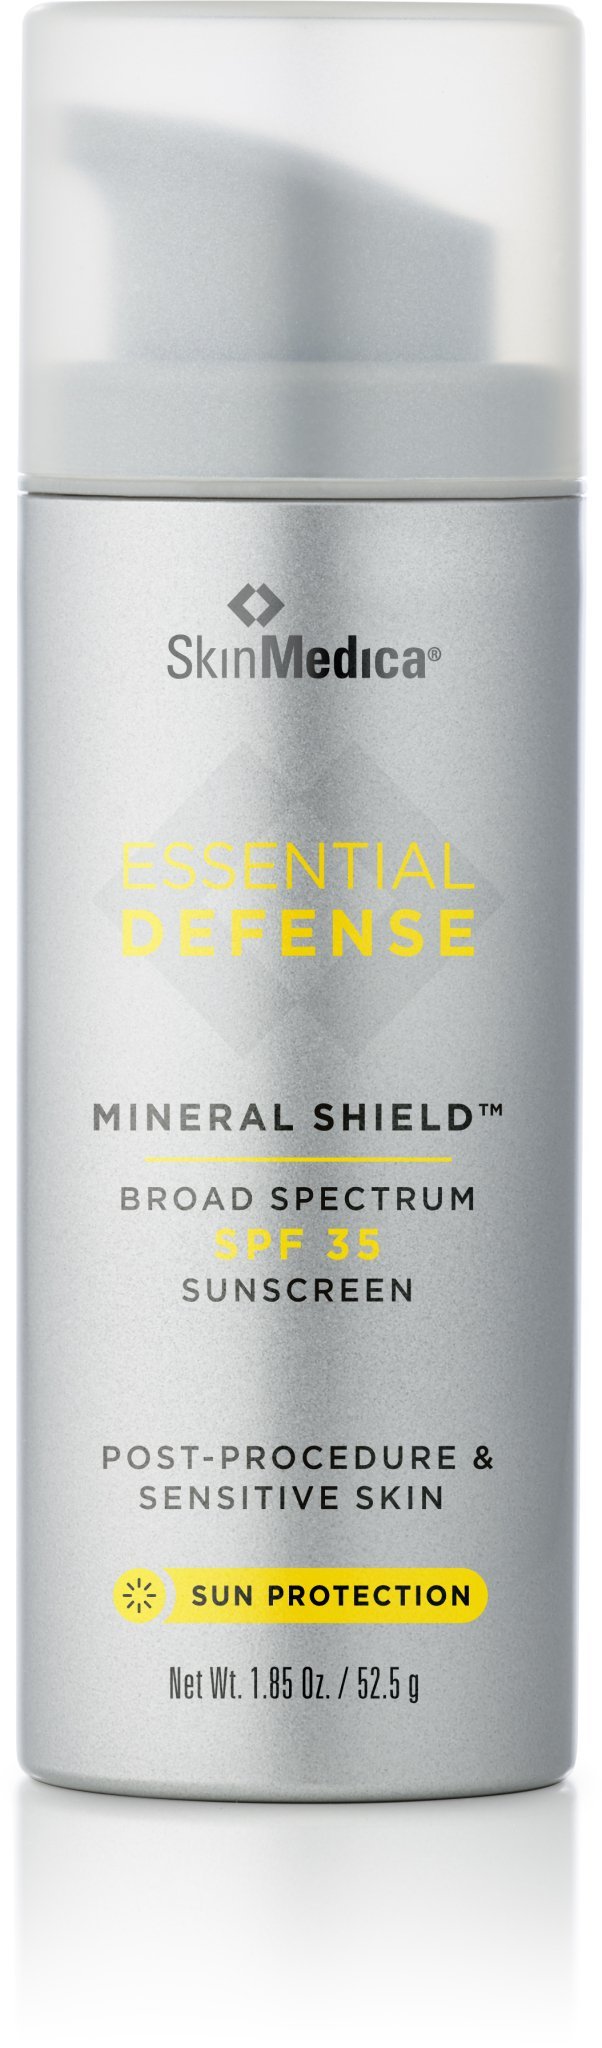 SkinMedica Essential Defense Mineral Shield SPF 35 Sunscreen, 1.85 Oz - BeesActive Australia